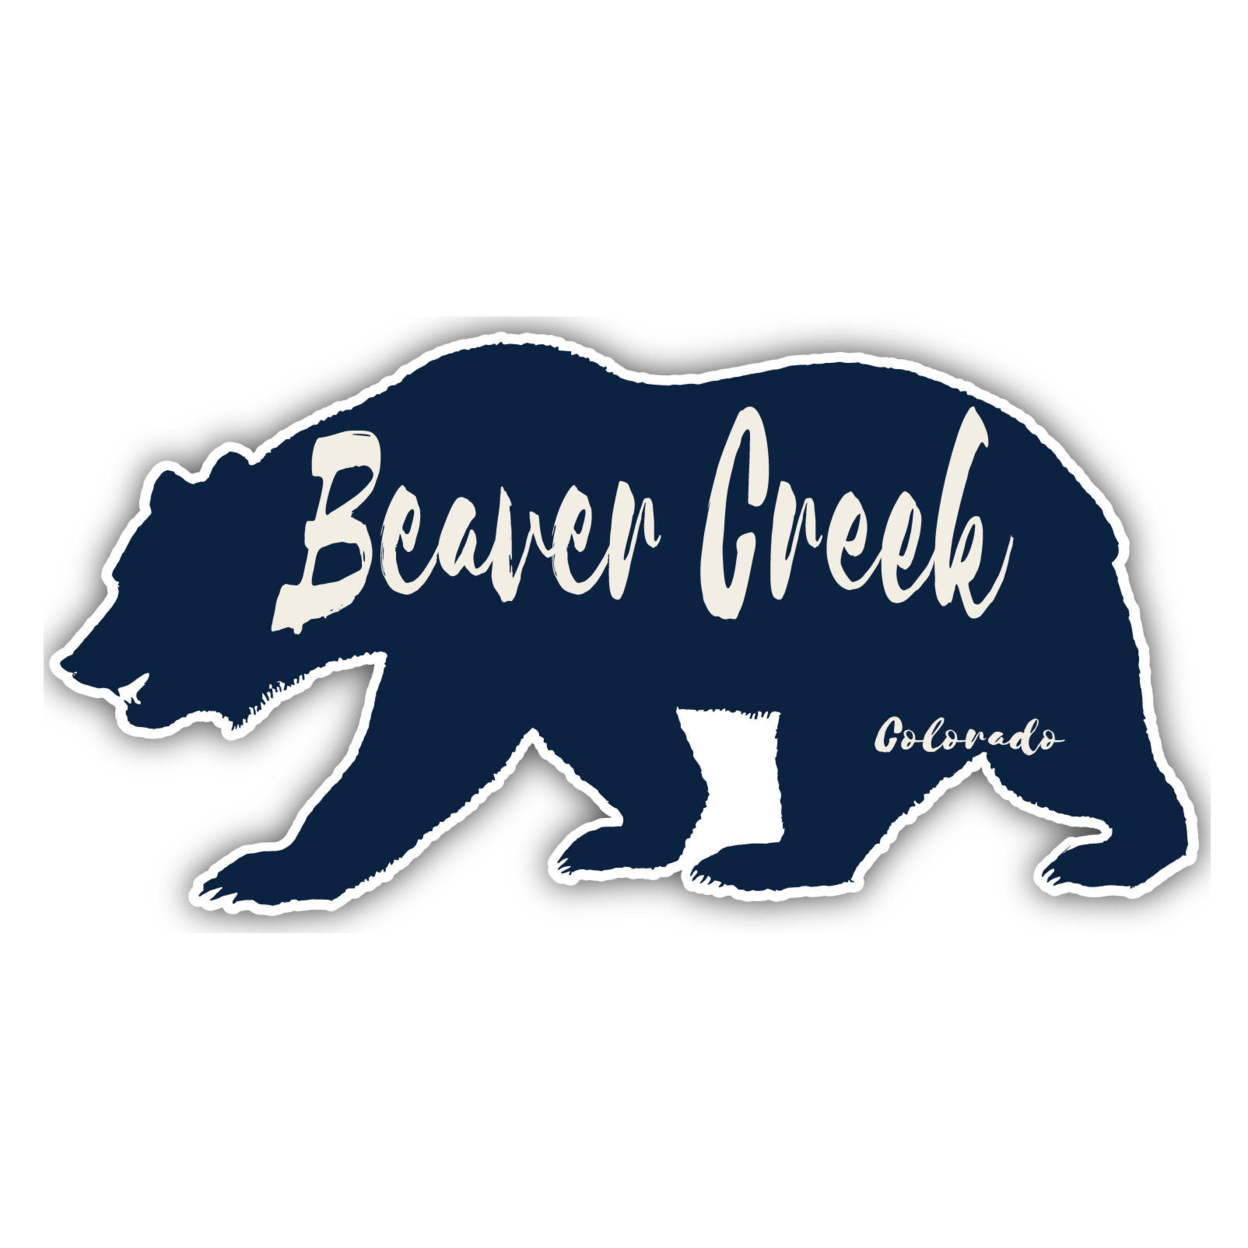 Beaver Creek Colorado Souvenir Decorative Stickers (Choose Theme And Size) - Single Unit, 10-Inch, Bear